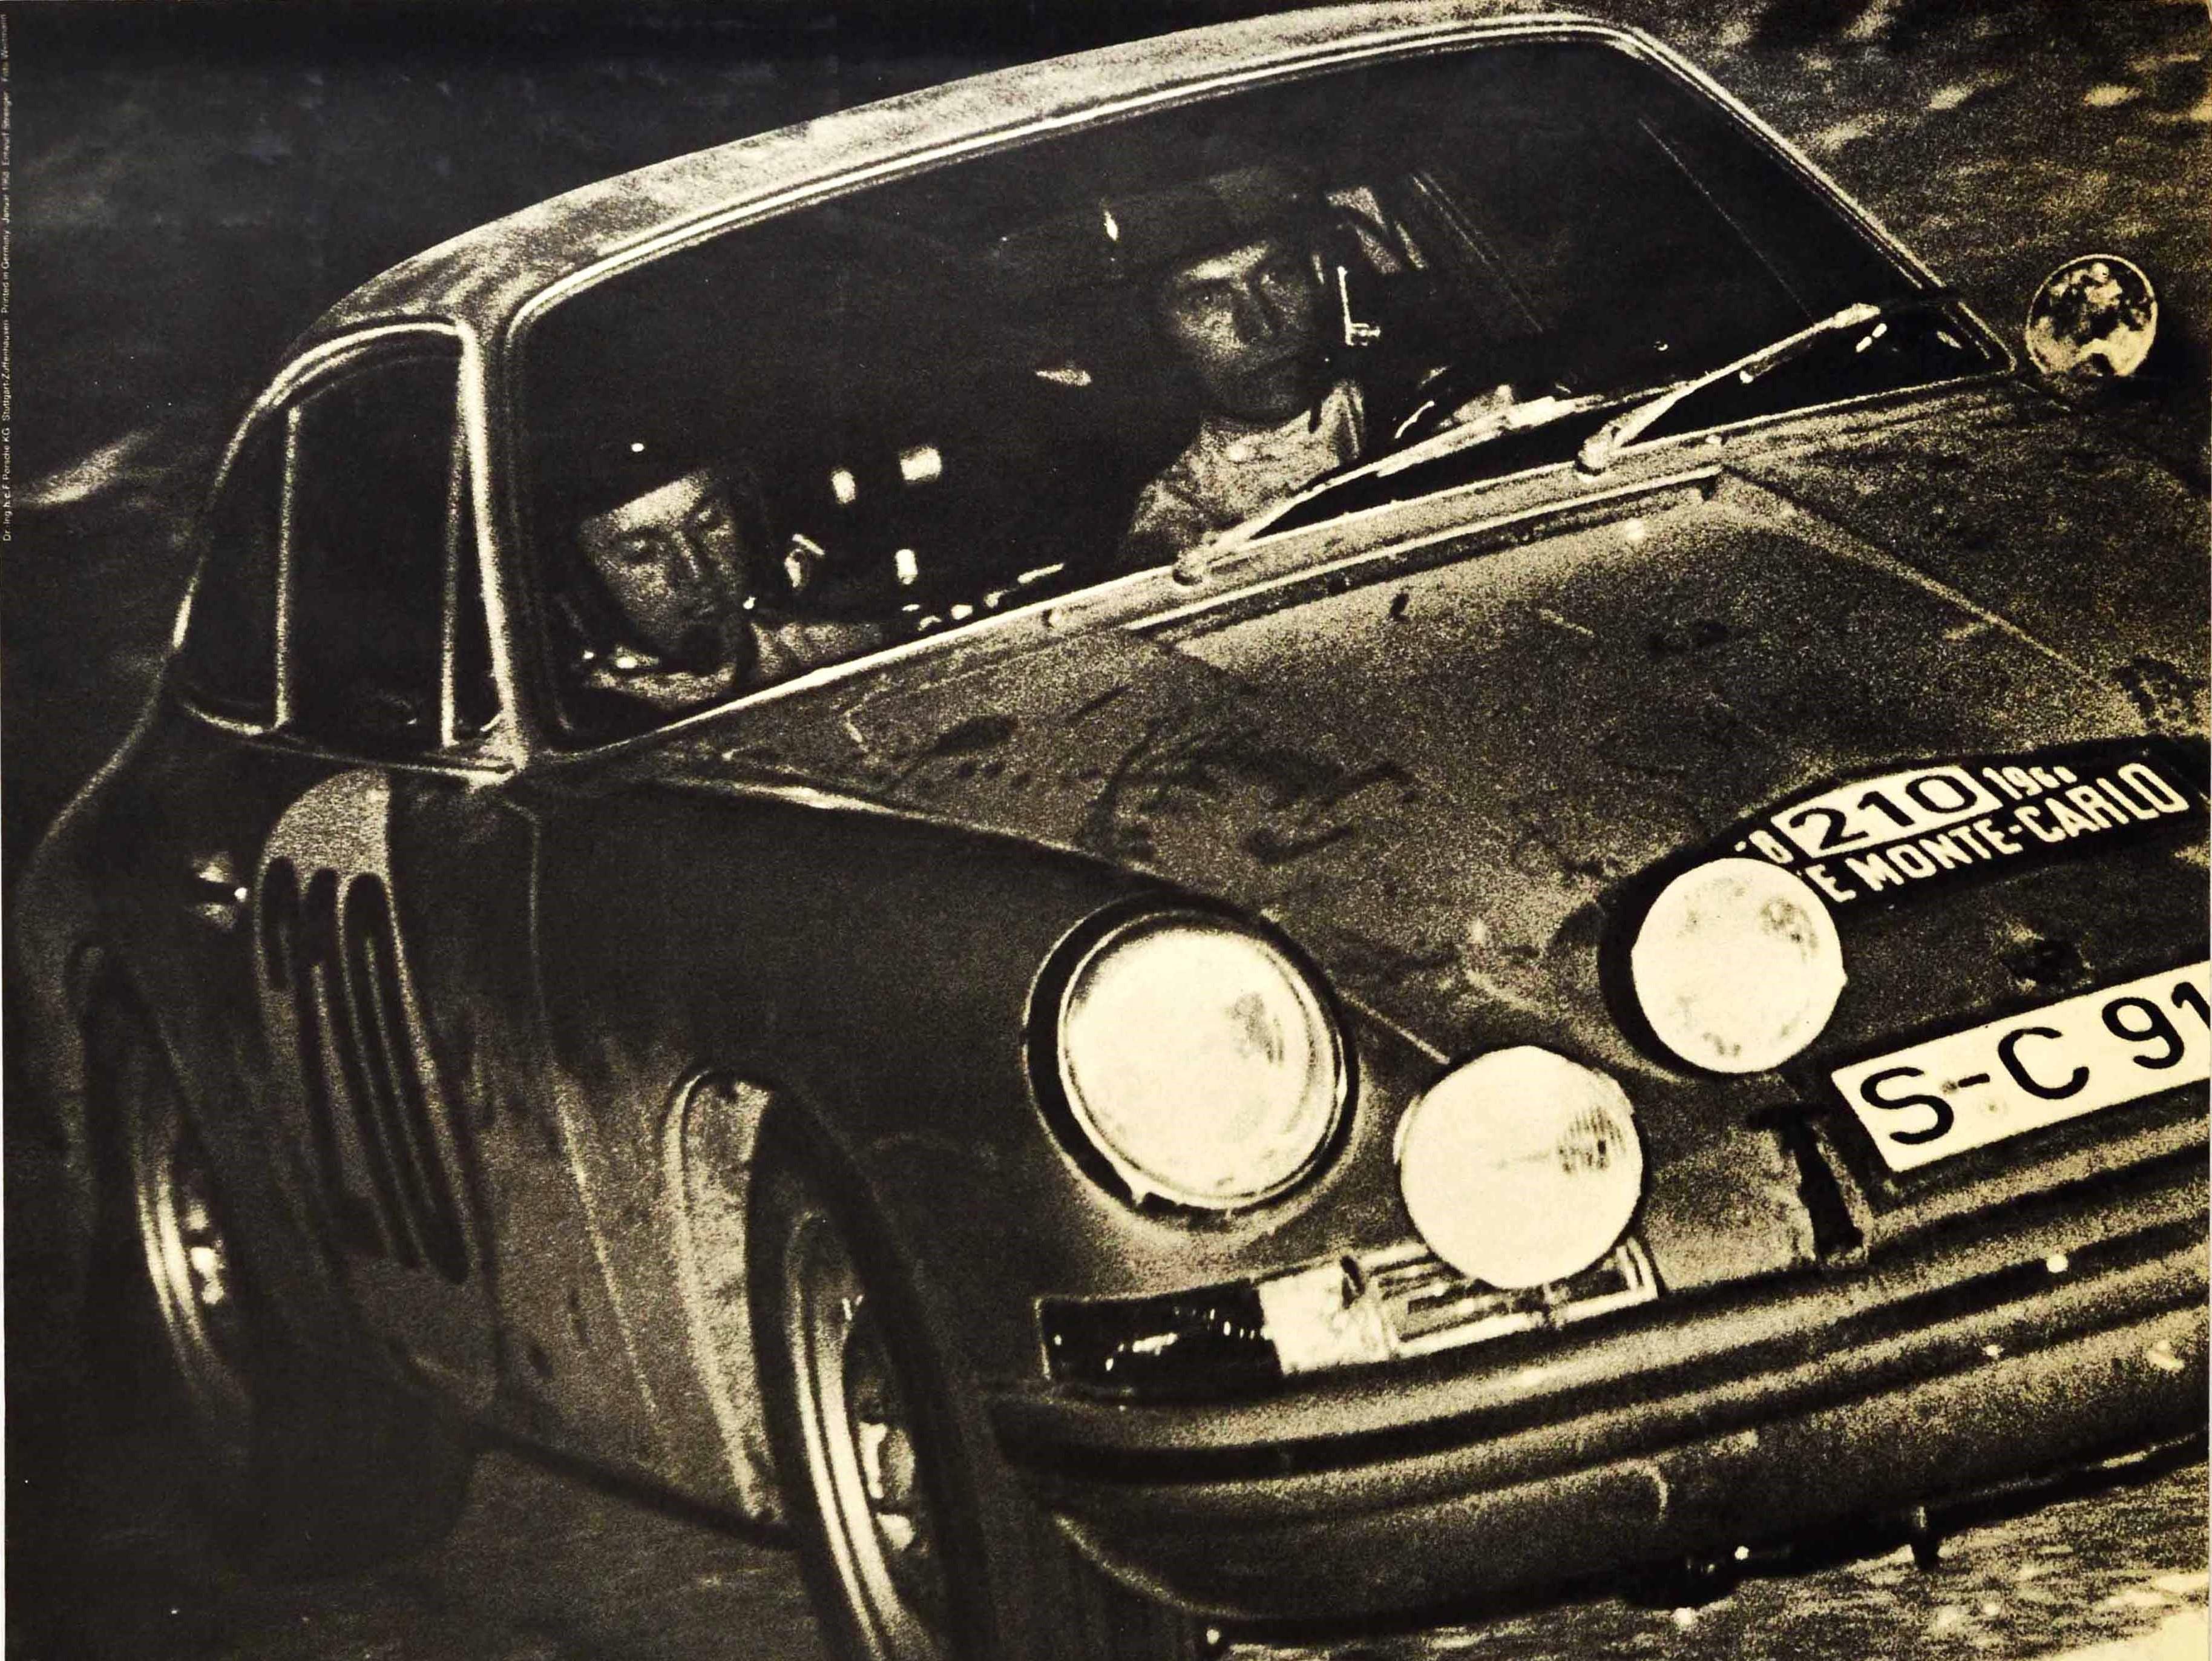 Original vintage car advertising poster celebrating Porsche Victory 1968 Rallye Monte Carlo 1. Vic Elford / David Stone 2. Pauli Toivonen / Martti Tiukkanen in Porsche 911T racing cars featuring a black and white photograph of Elford and Stone